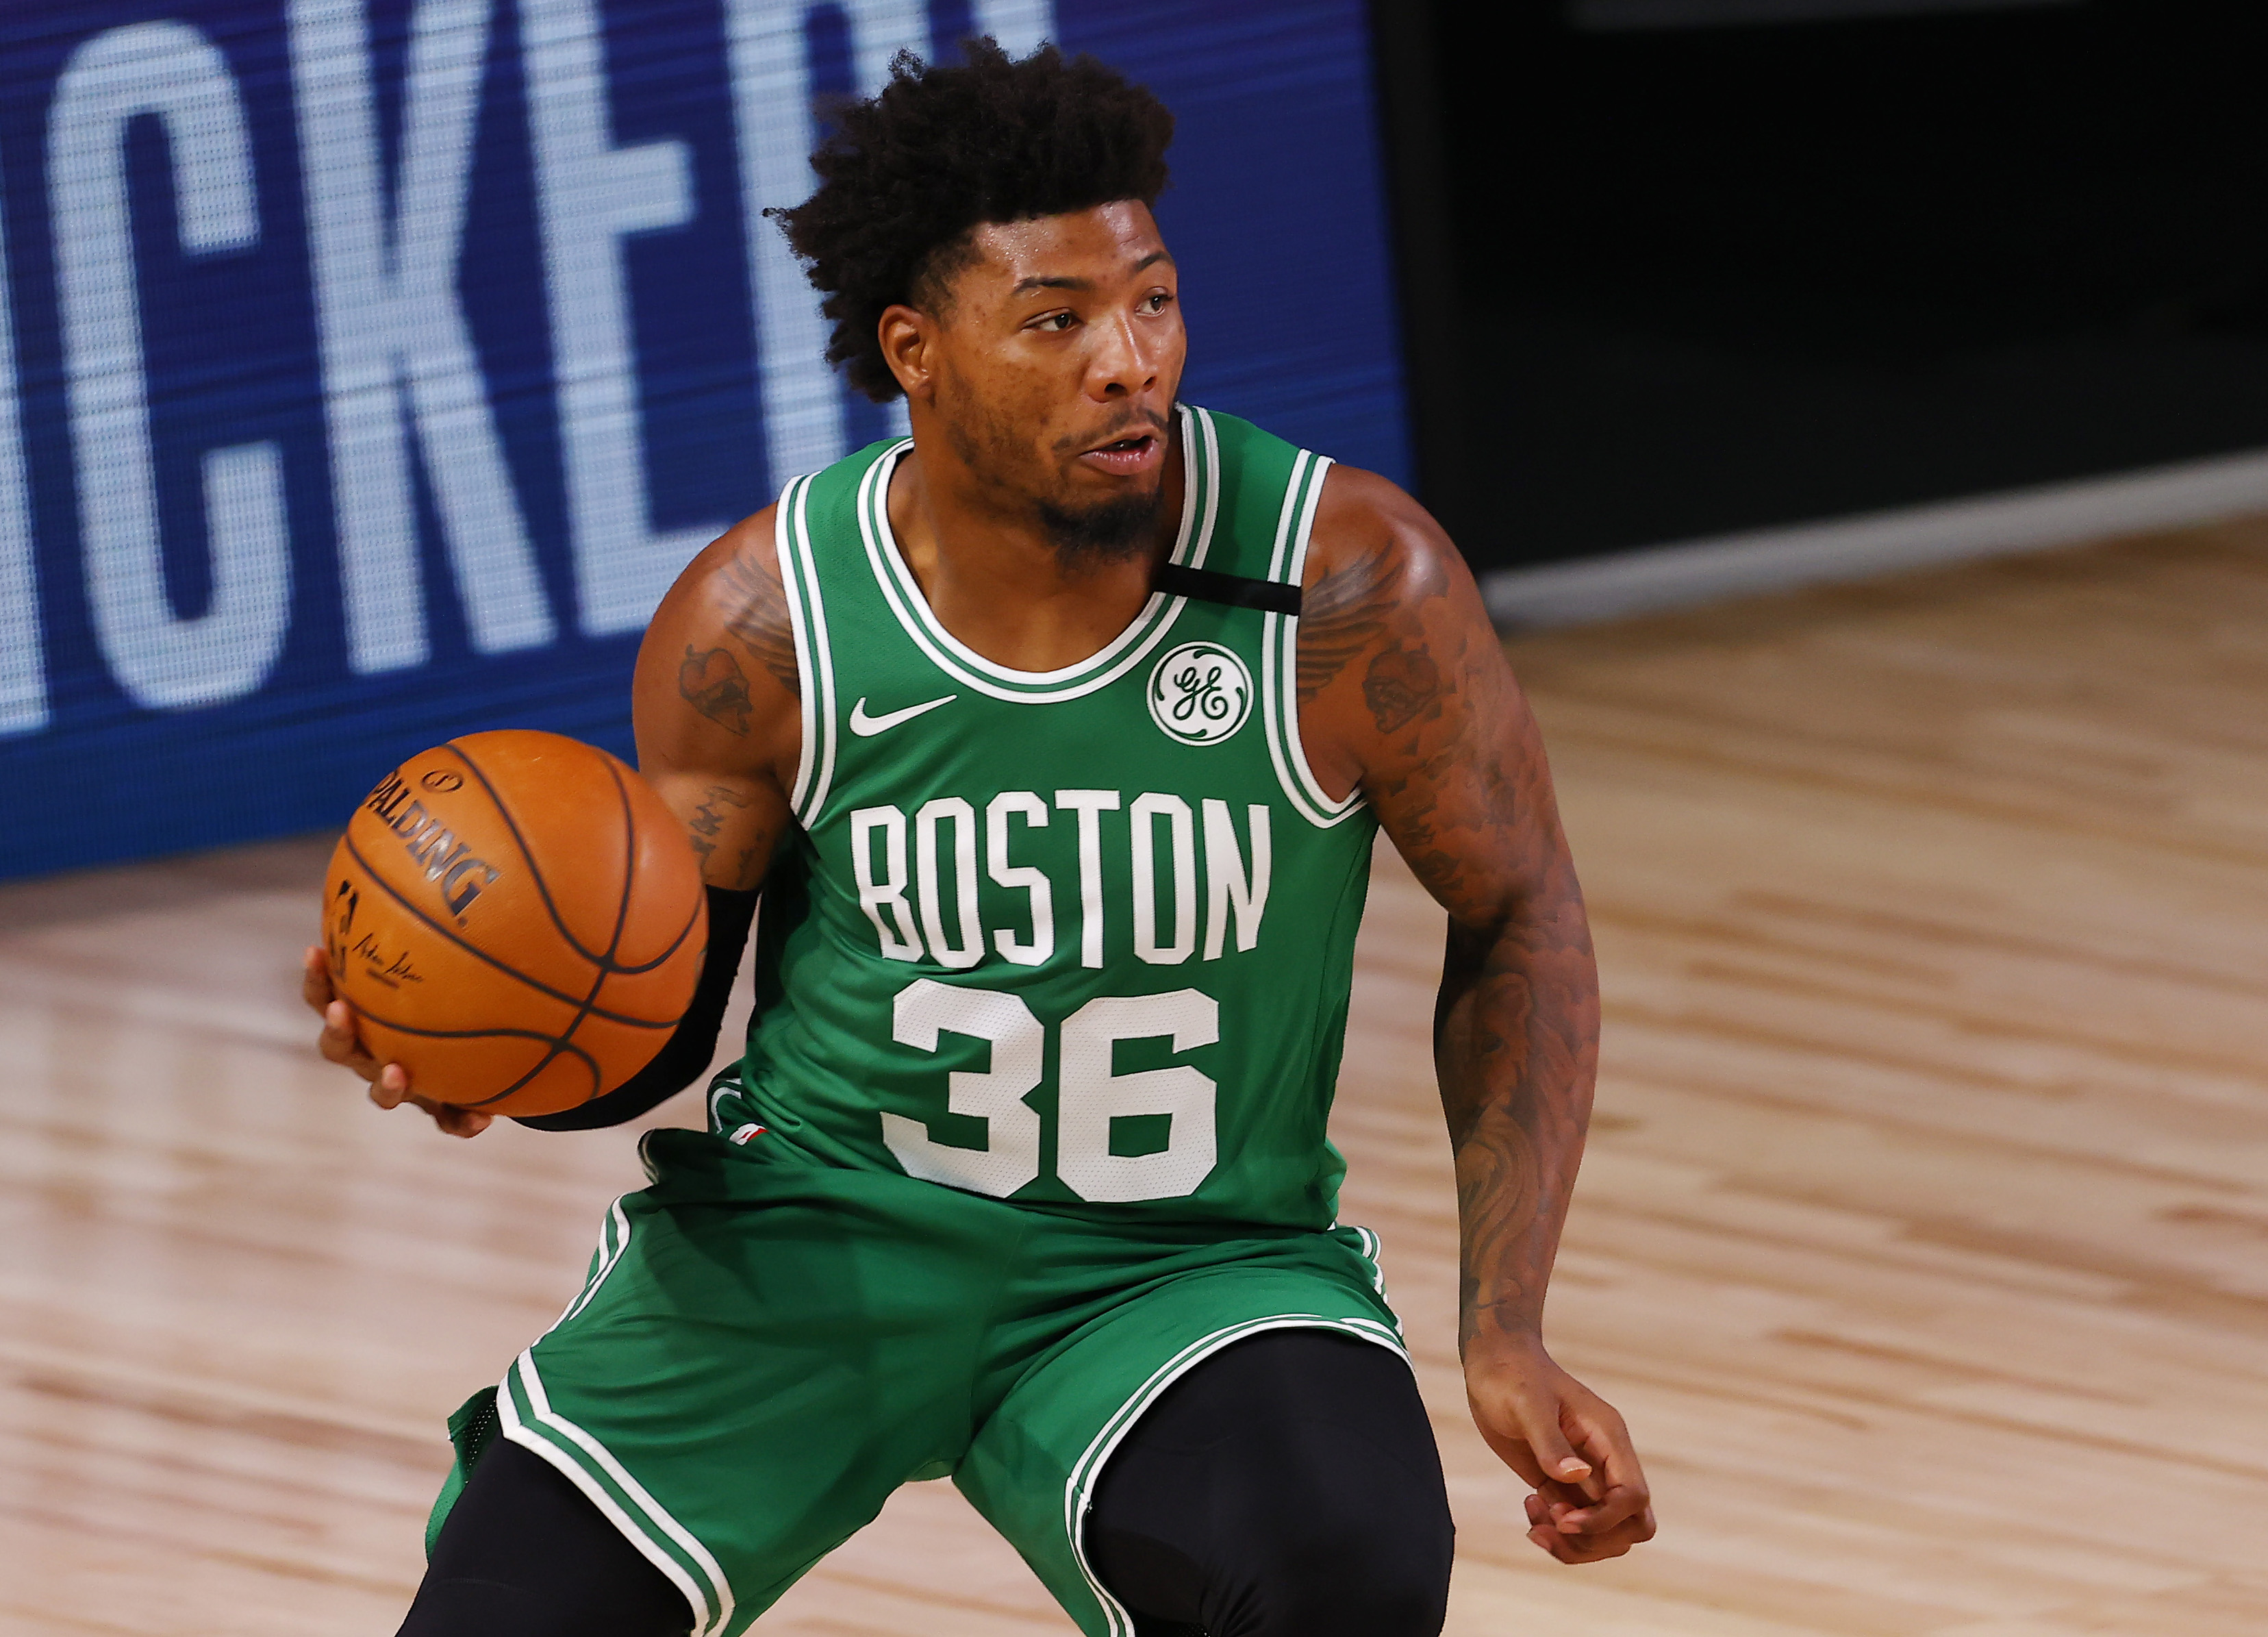 The Celtics' Marcus Smart